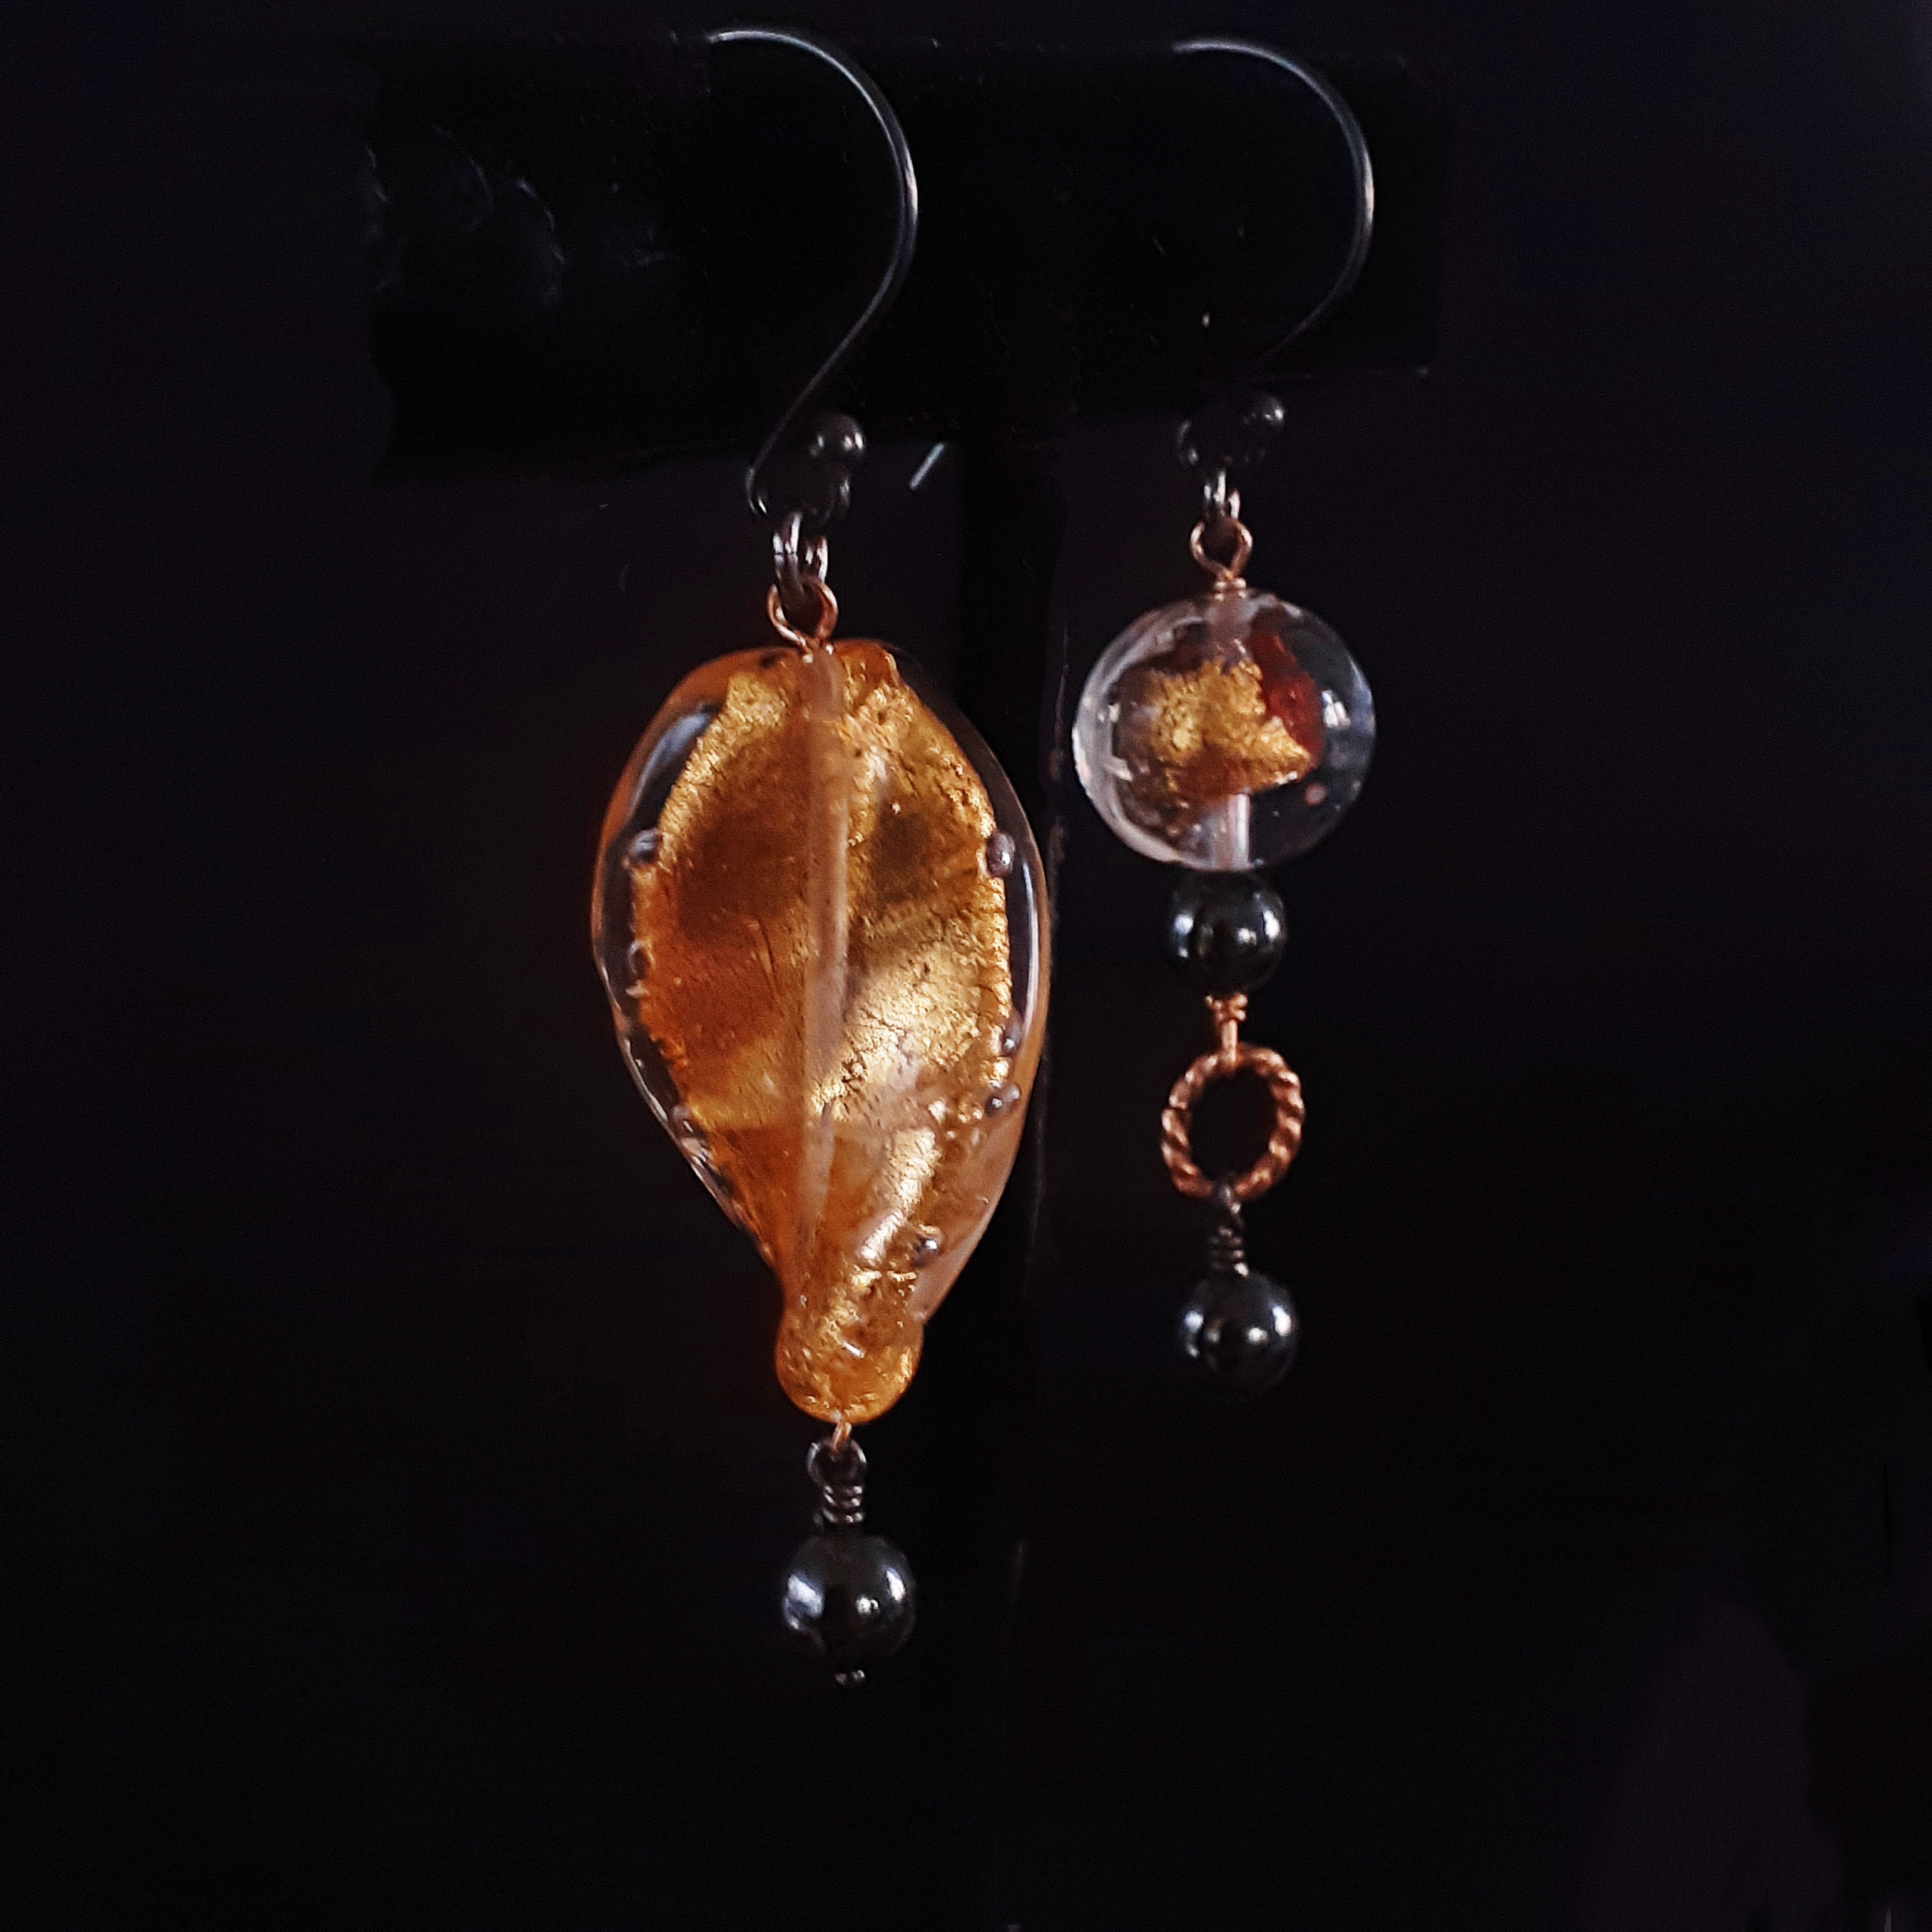 Venetian Glass Earrings - One of a Kind